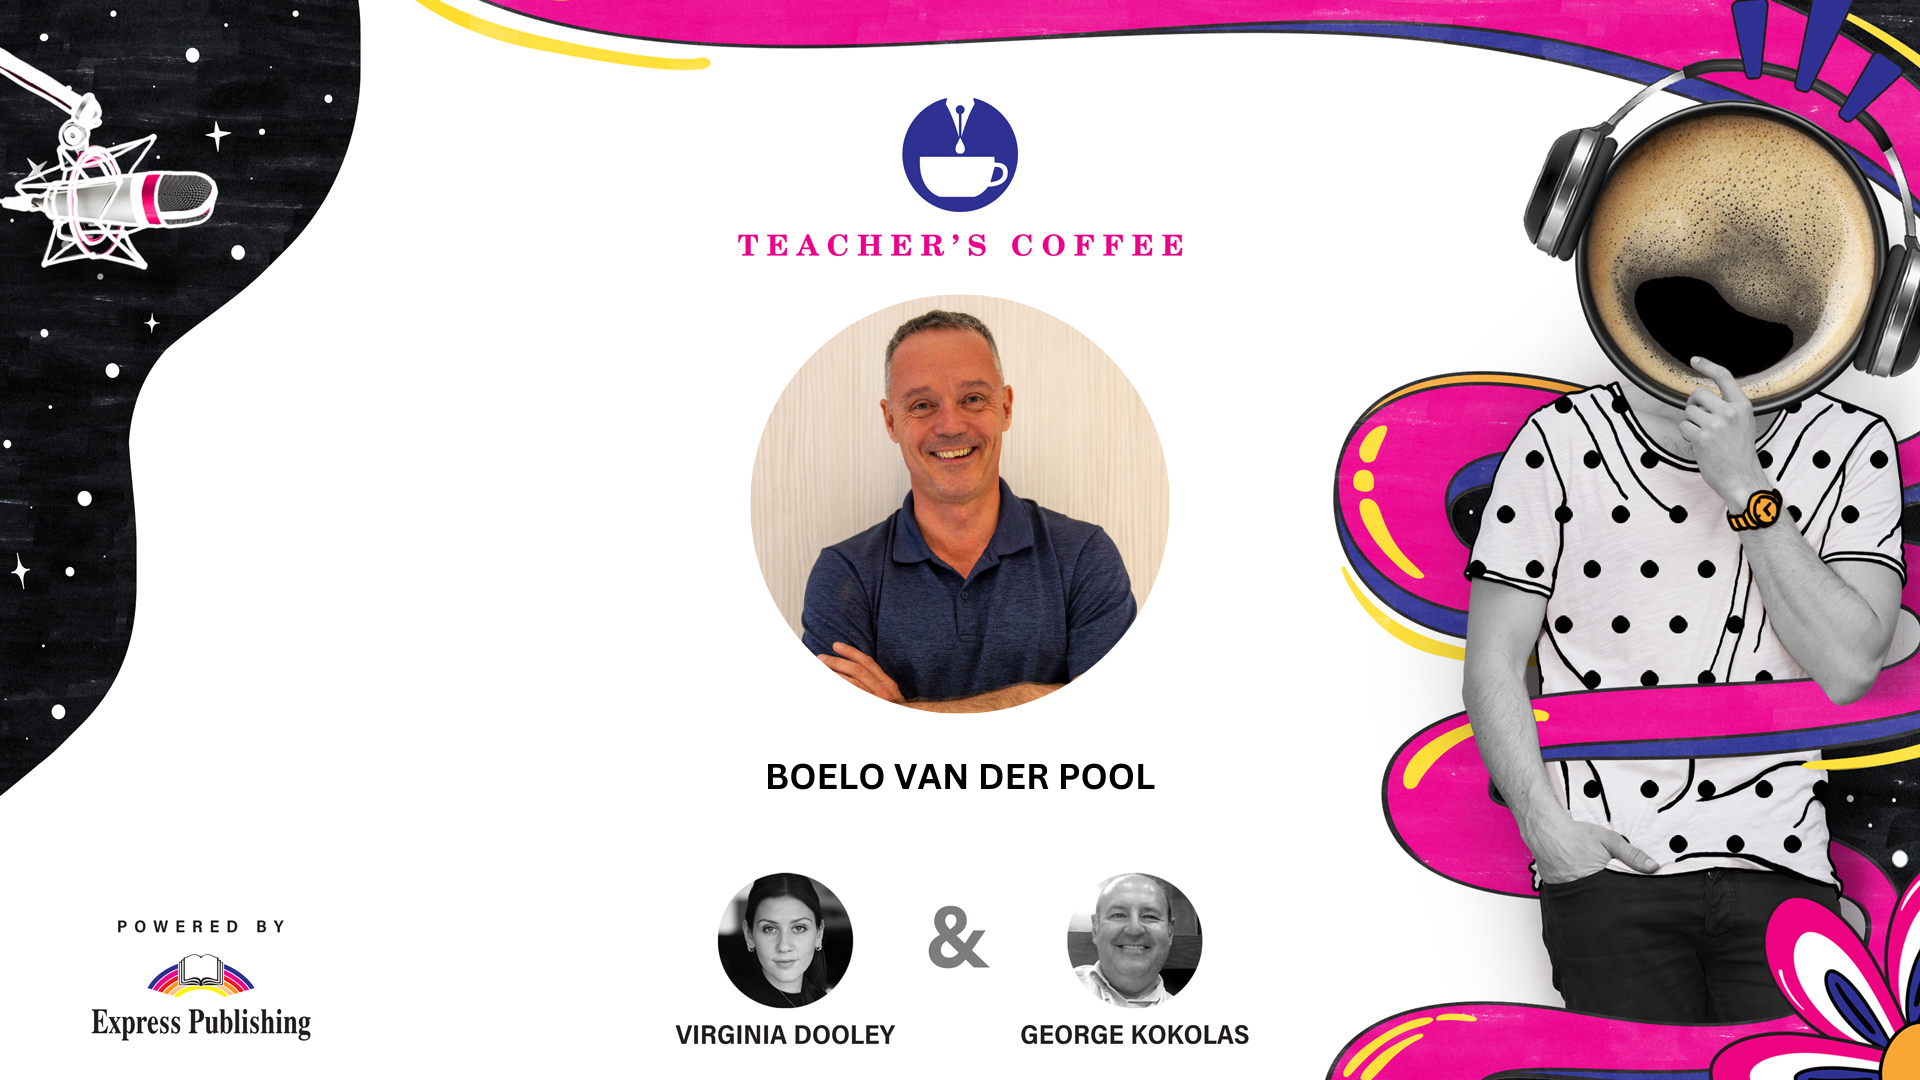 S07E22 Teacher's Coffee with Boelo van der Pool